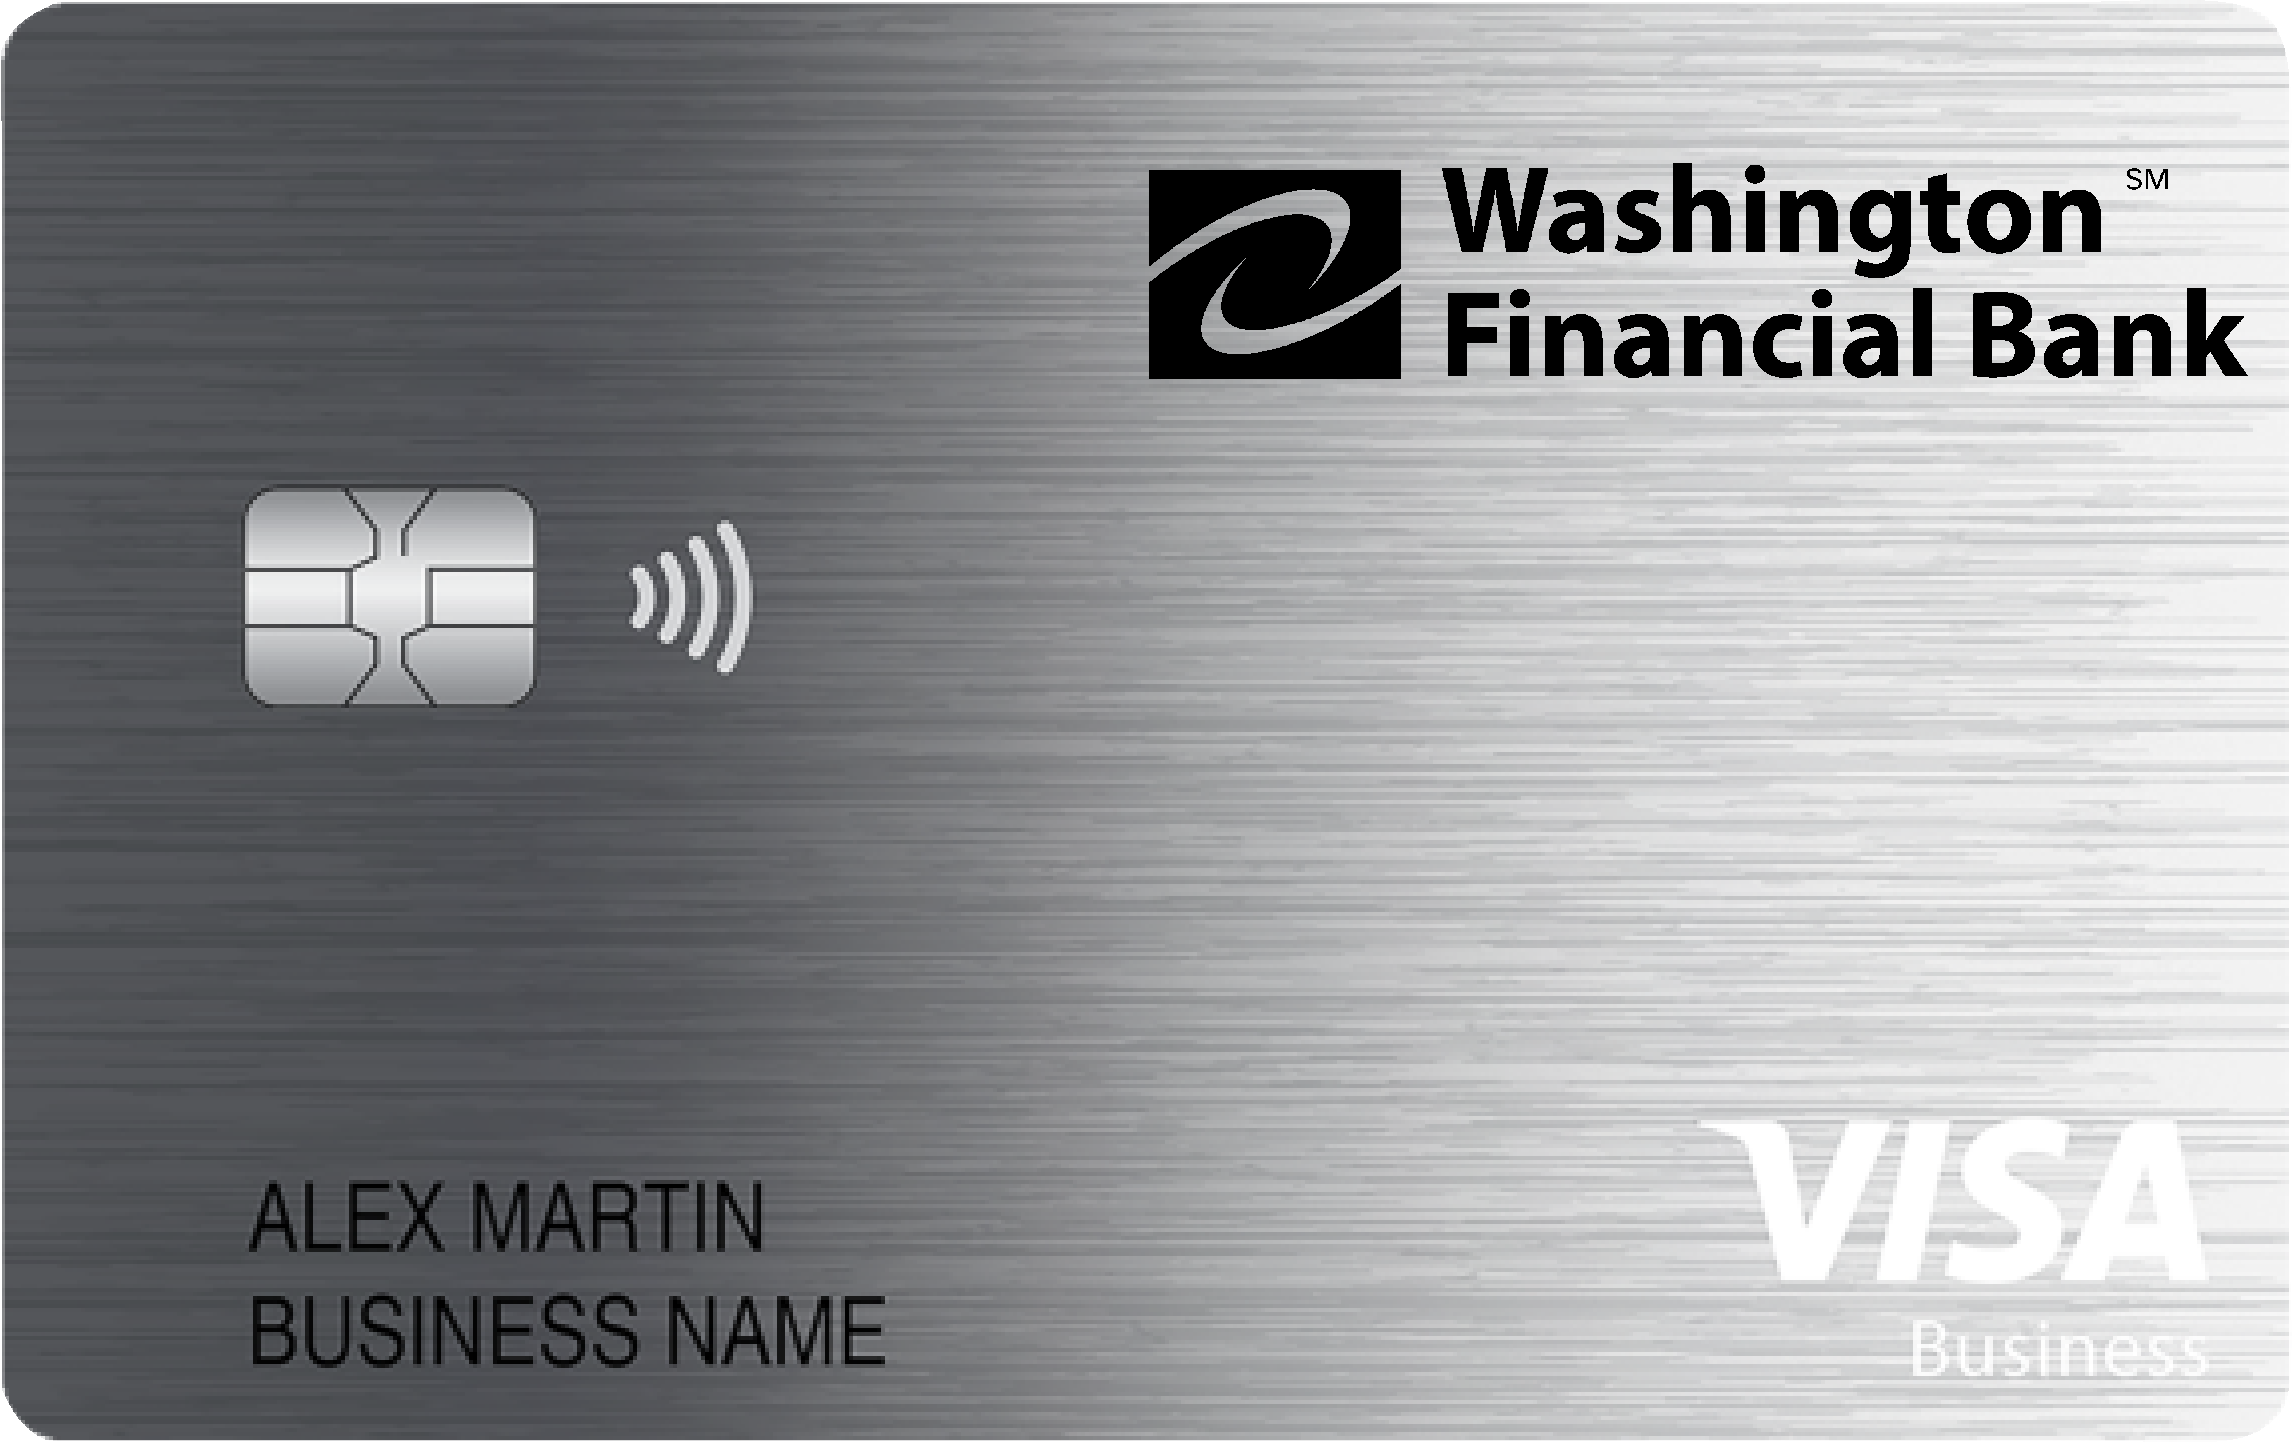 Washington Financial Bank